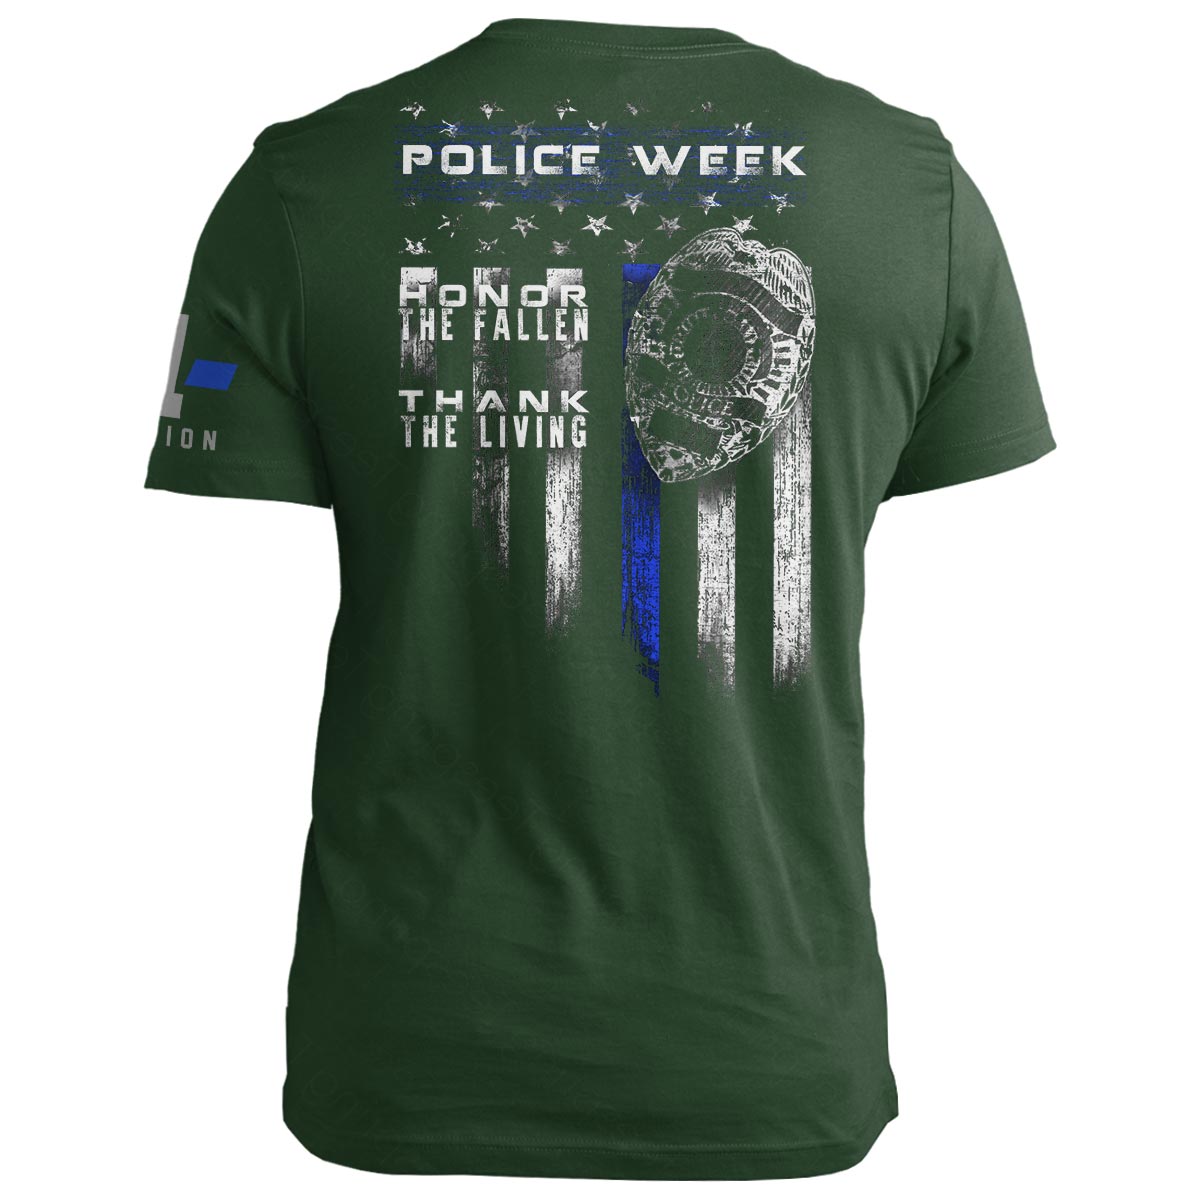 Police Week: Honor The Fallen